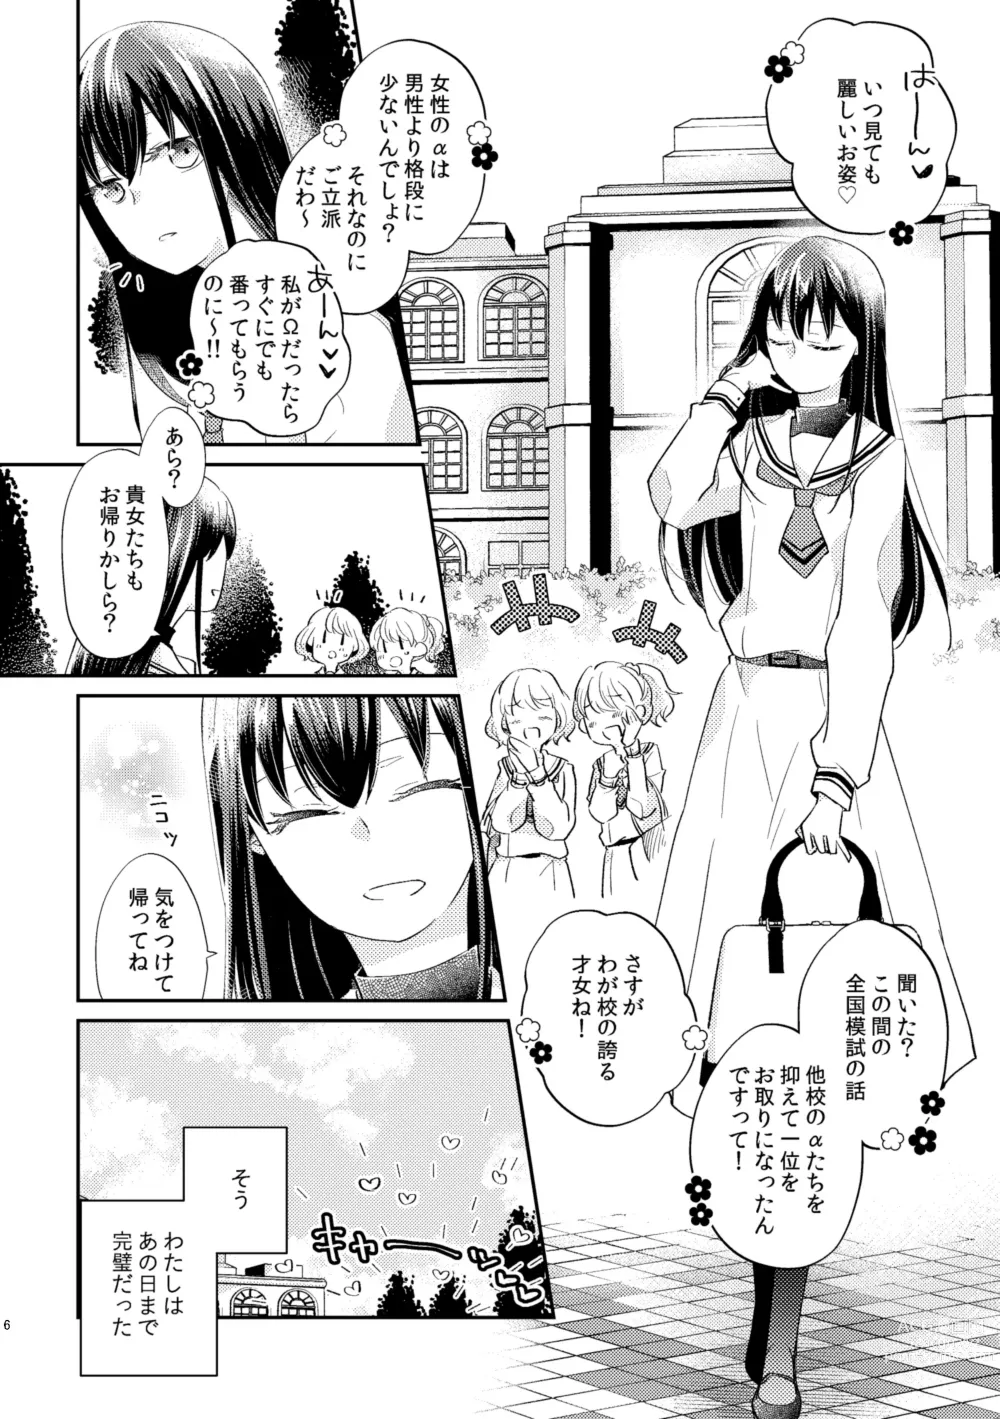 Page 7 of doujinshi Unmei - Otoko Ω x Onna α